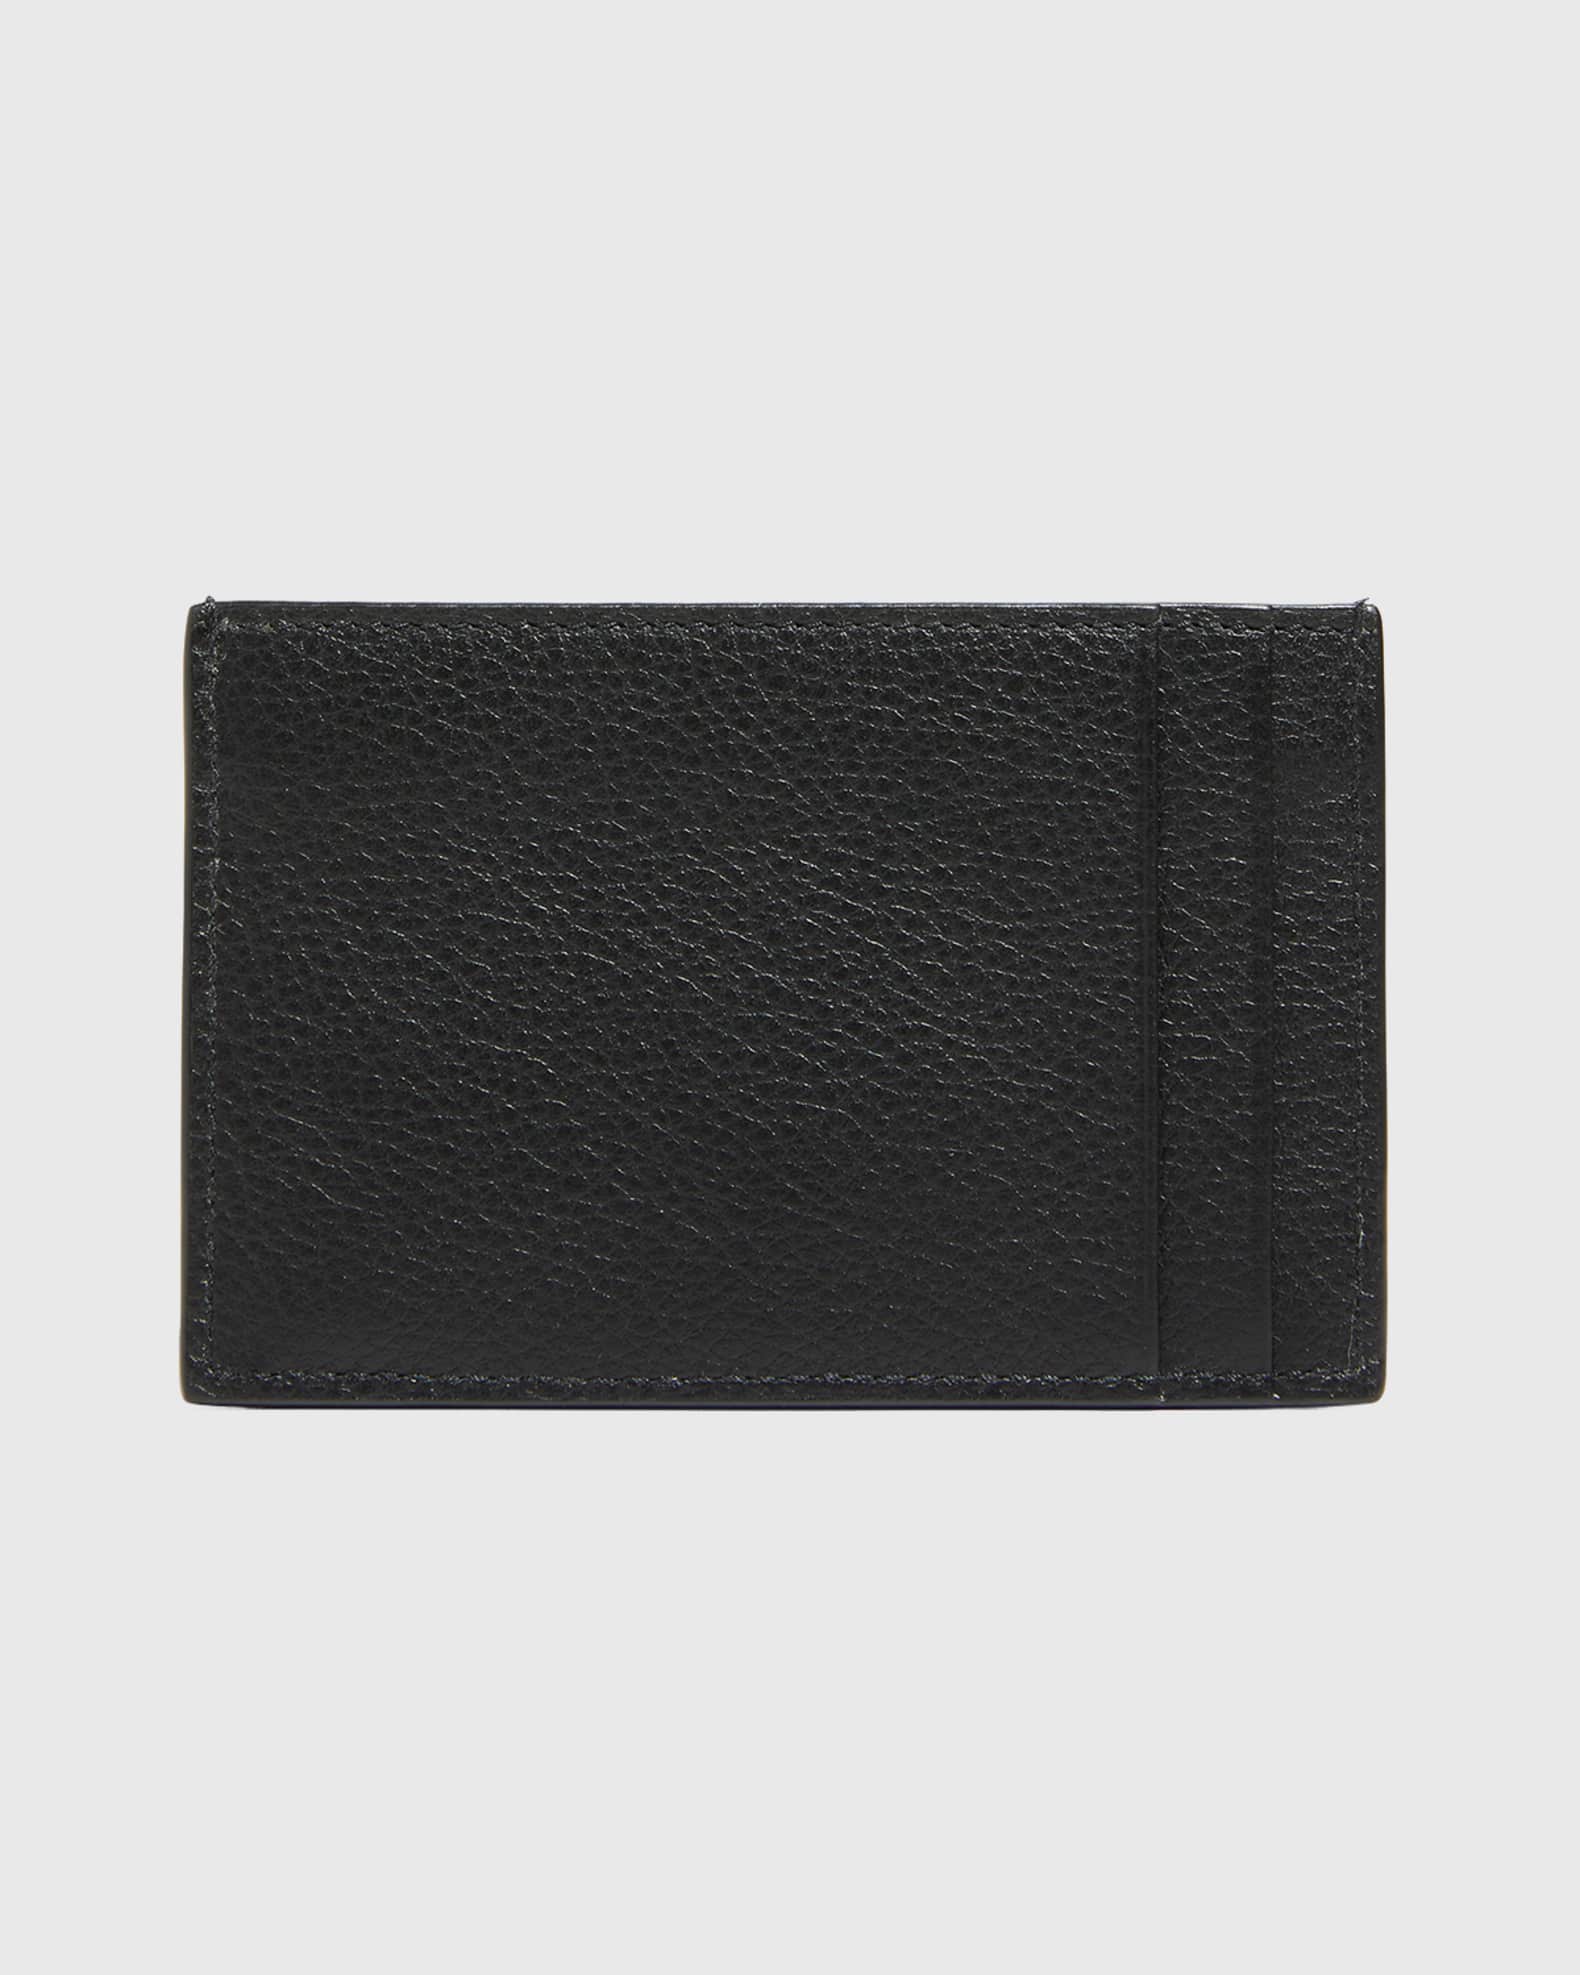 Vintage Louis Vuitton Wallet Billfold snap closure case Card Holder USA SALE